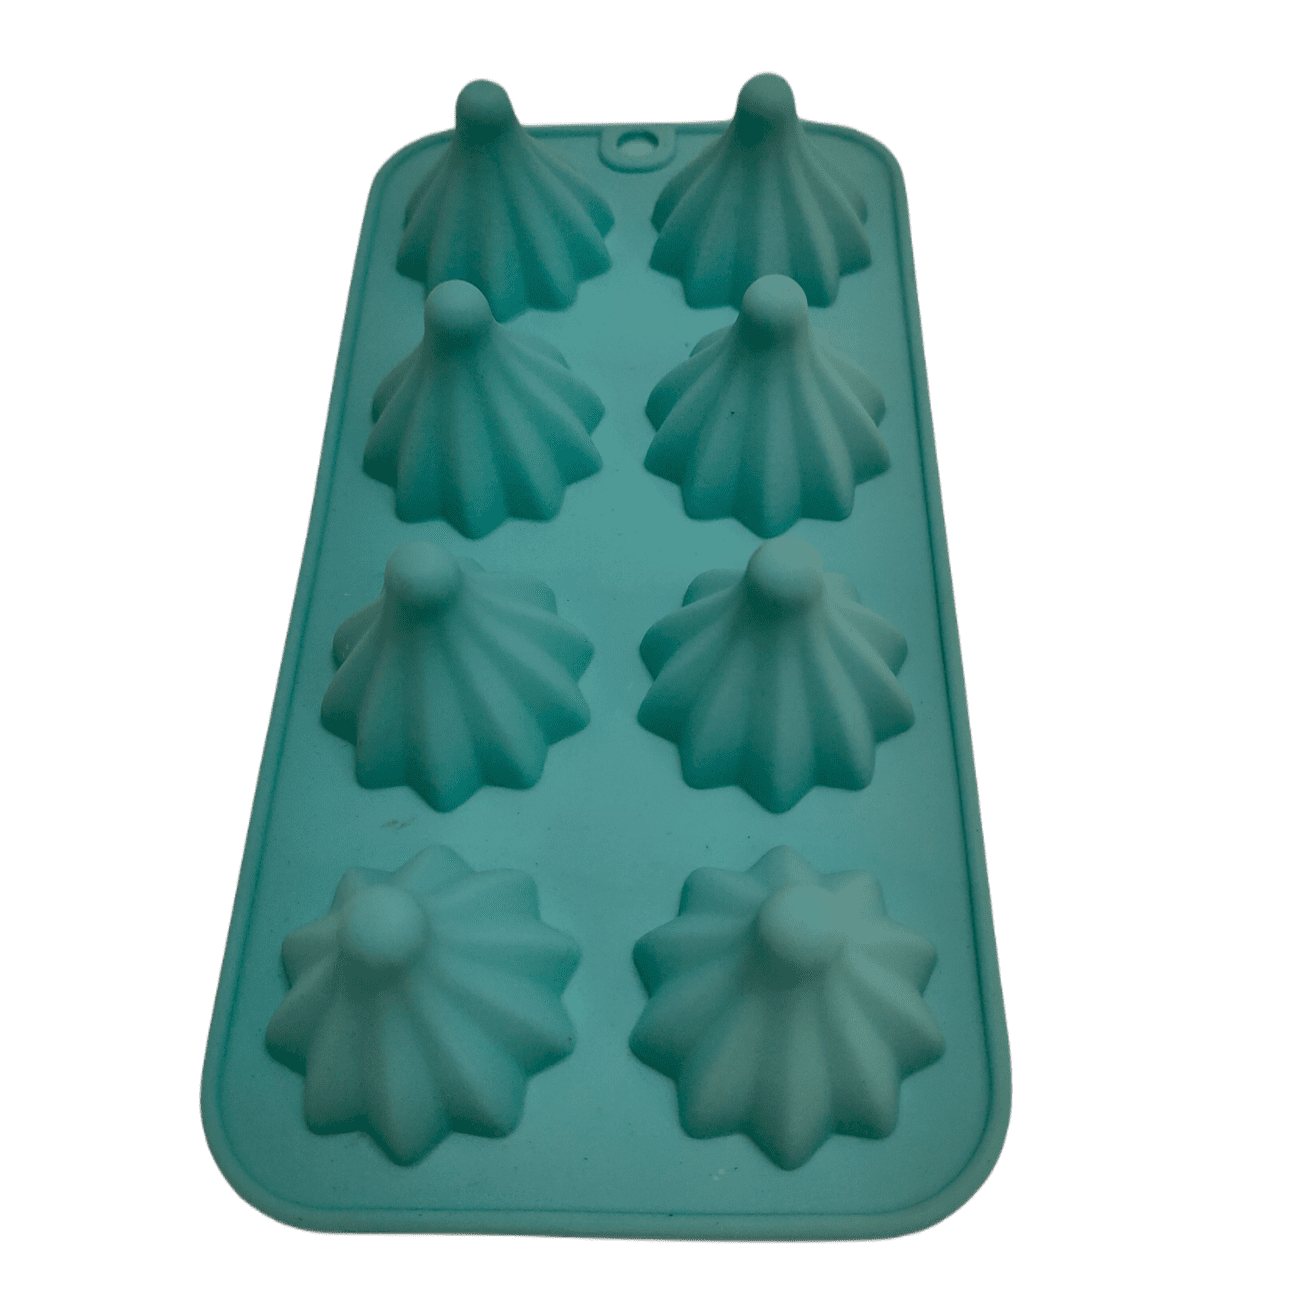 Silicon 8 modak mould Sweetkraft | Baking supplies